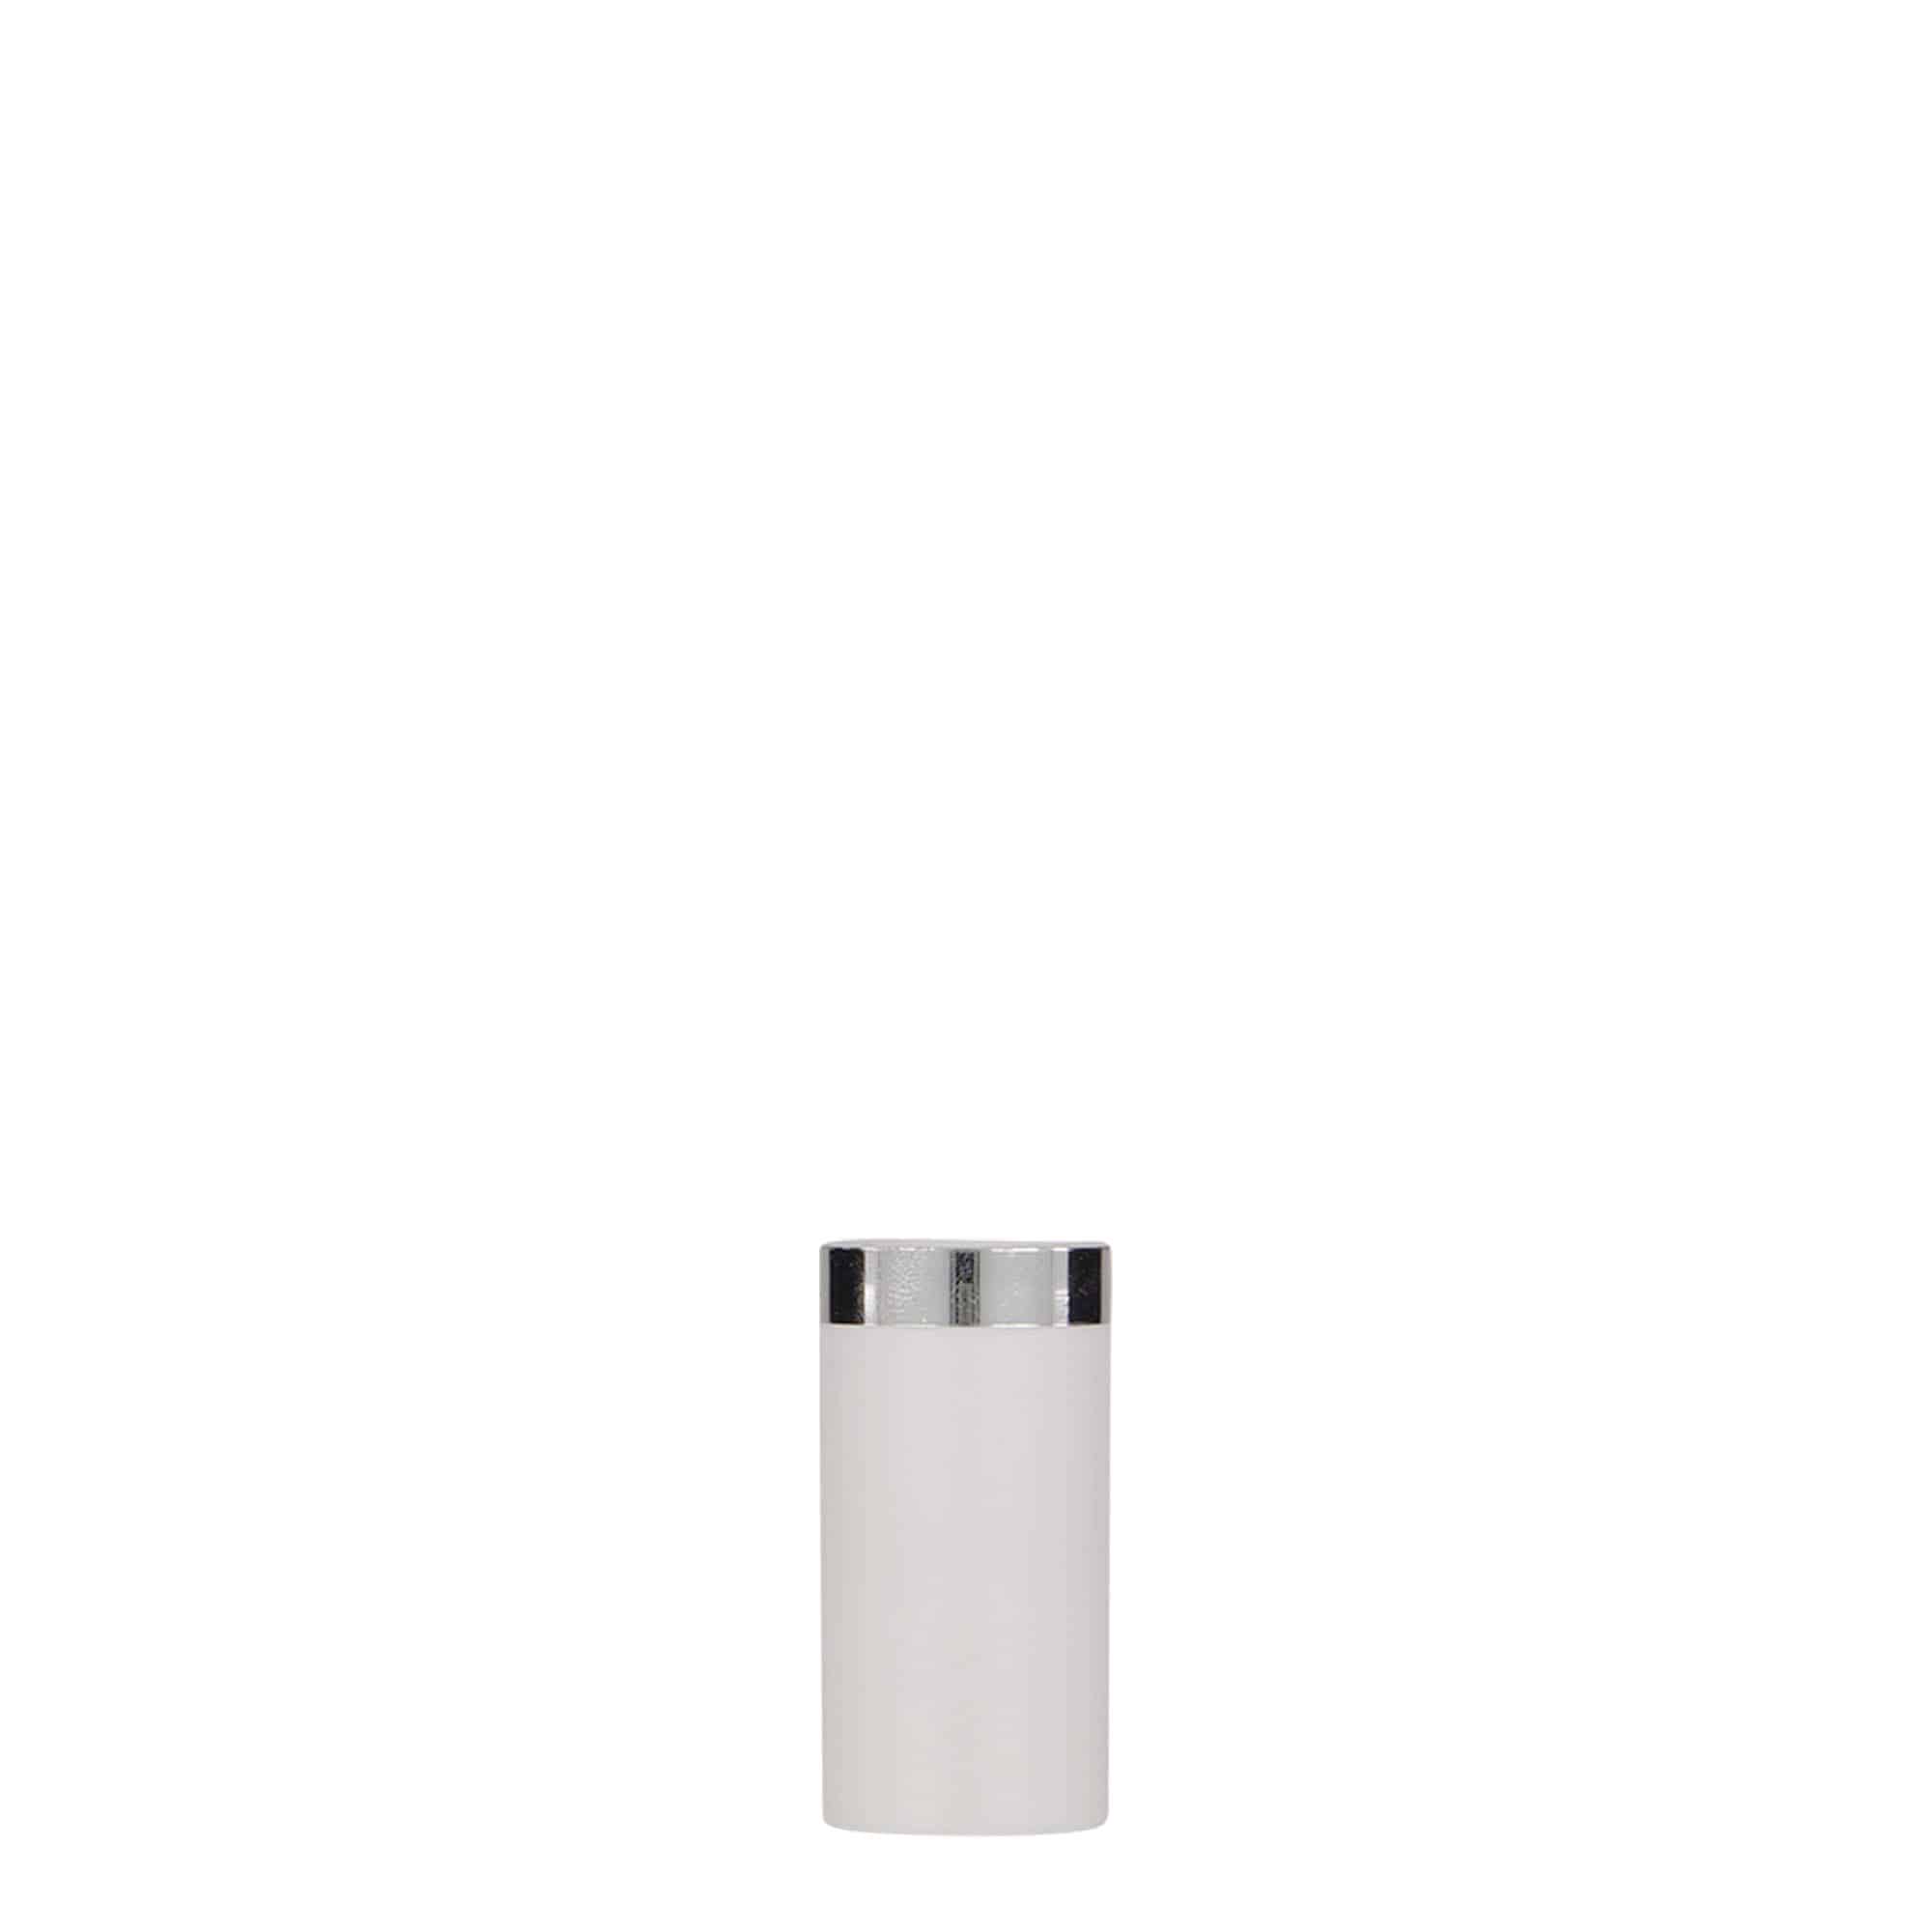 Flacon airless 5 ml 'Nano', plastique PP, blanc